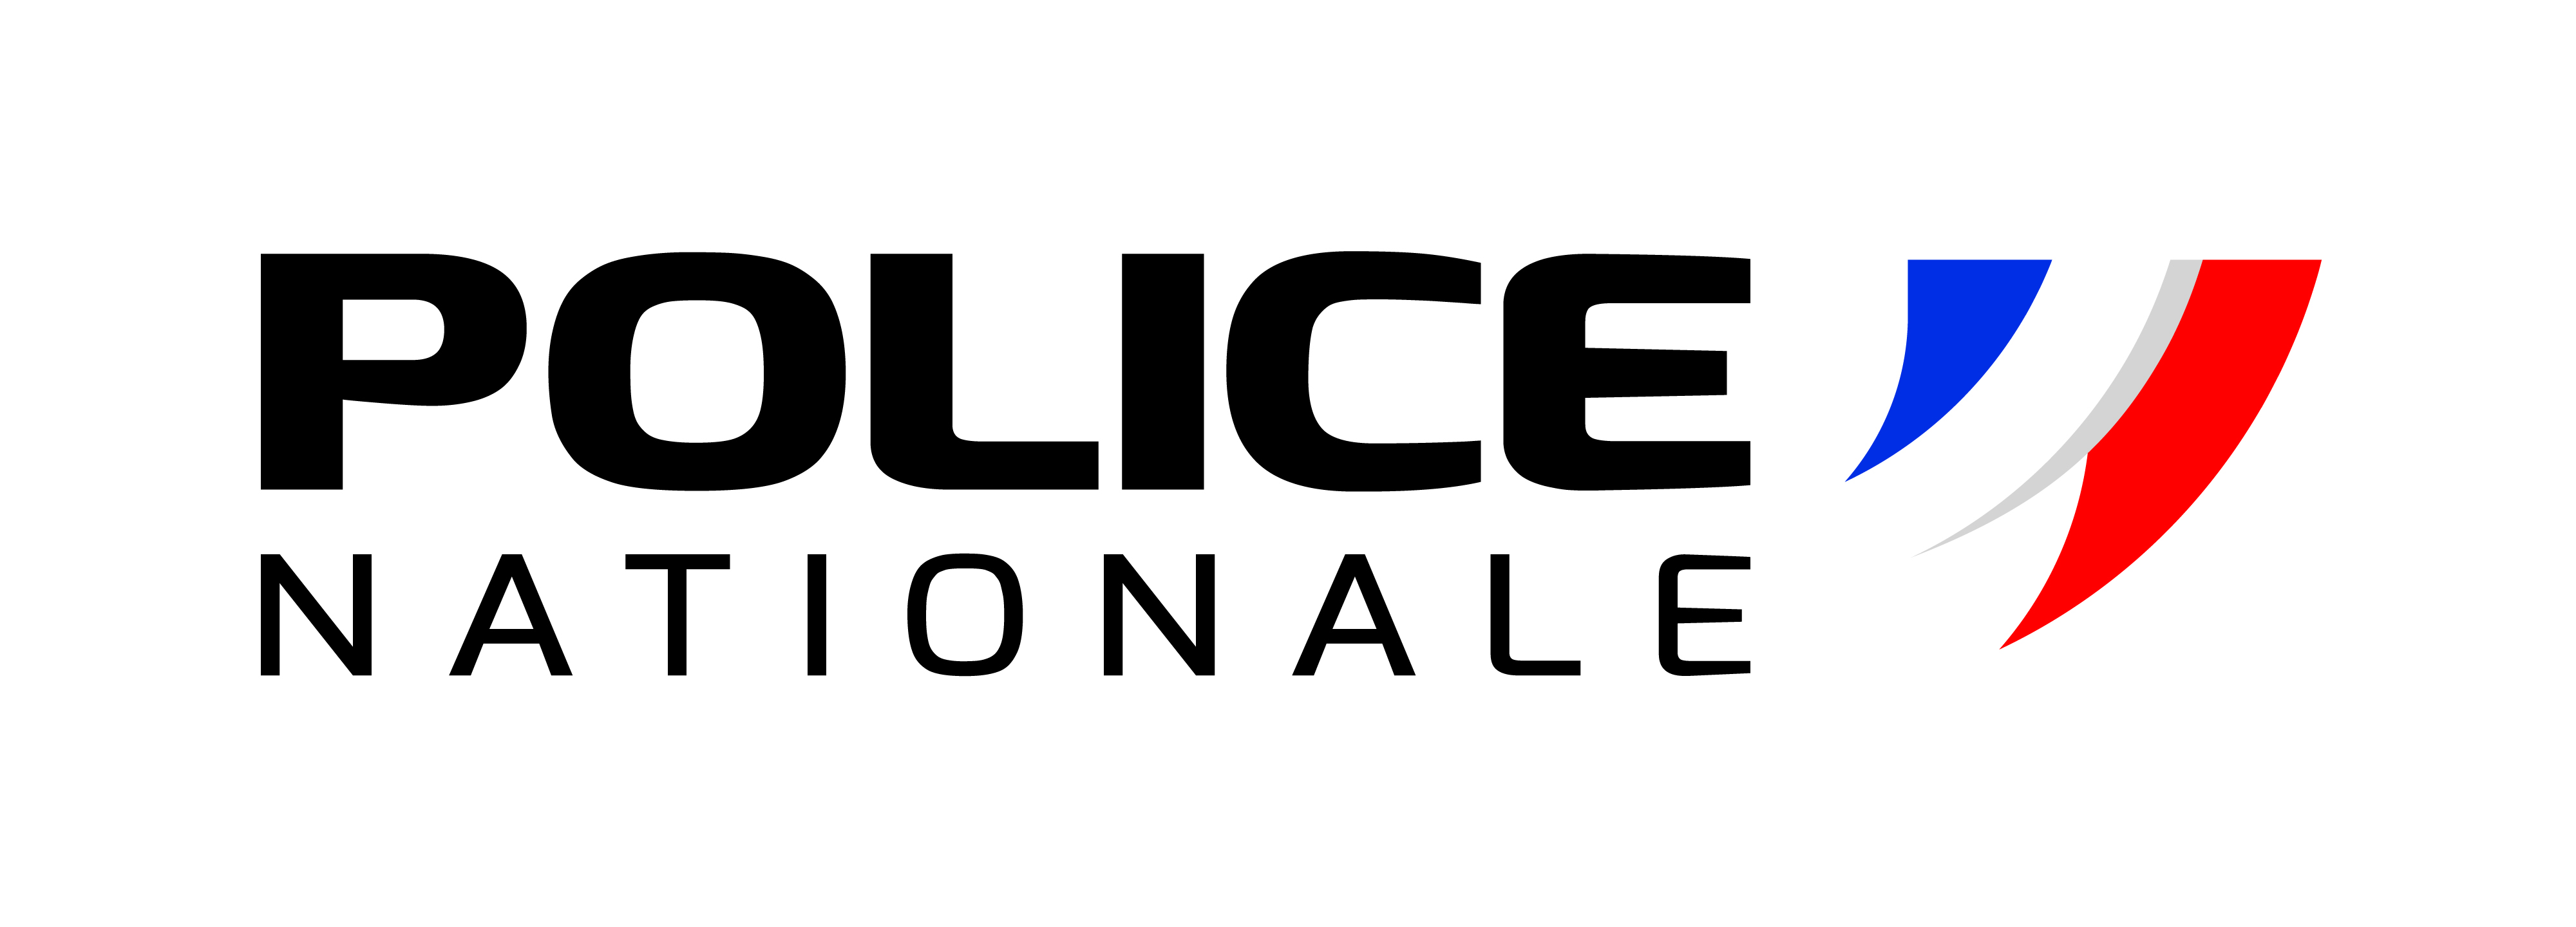 Police nationale logo